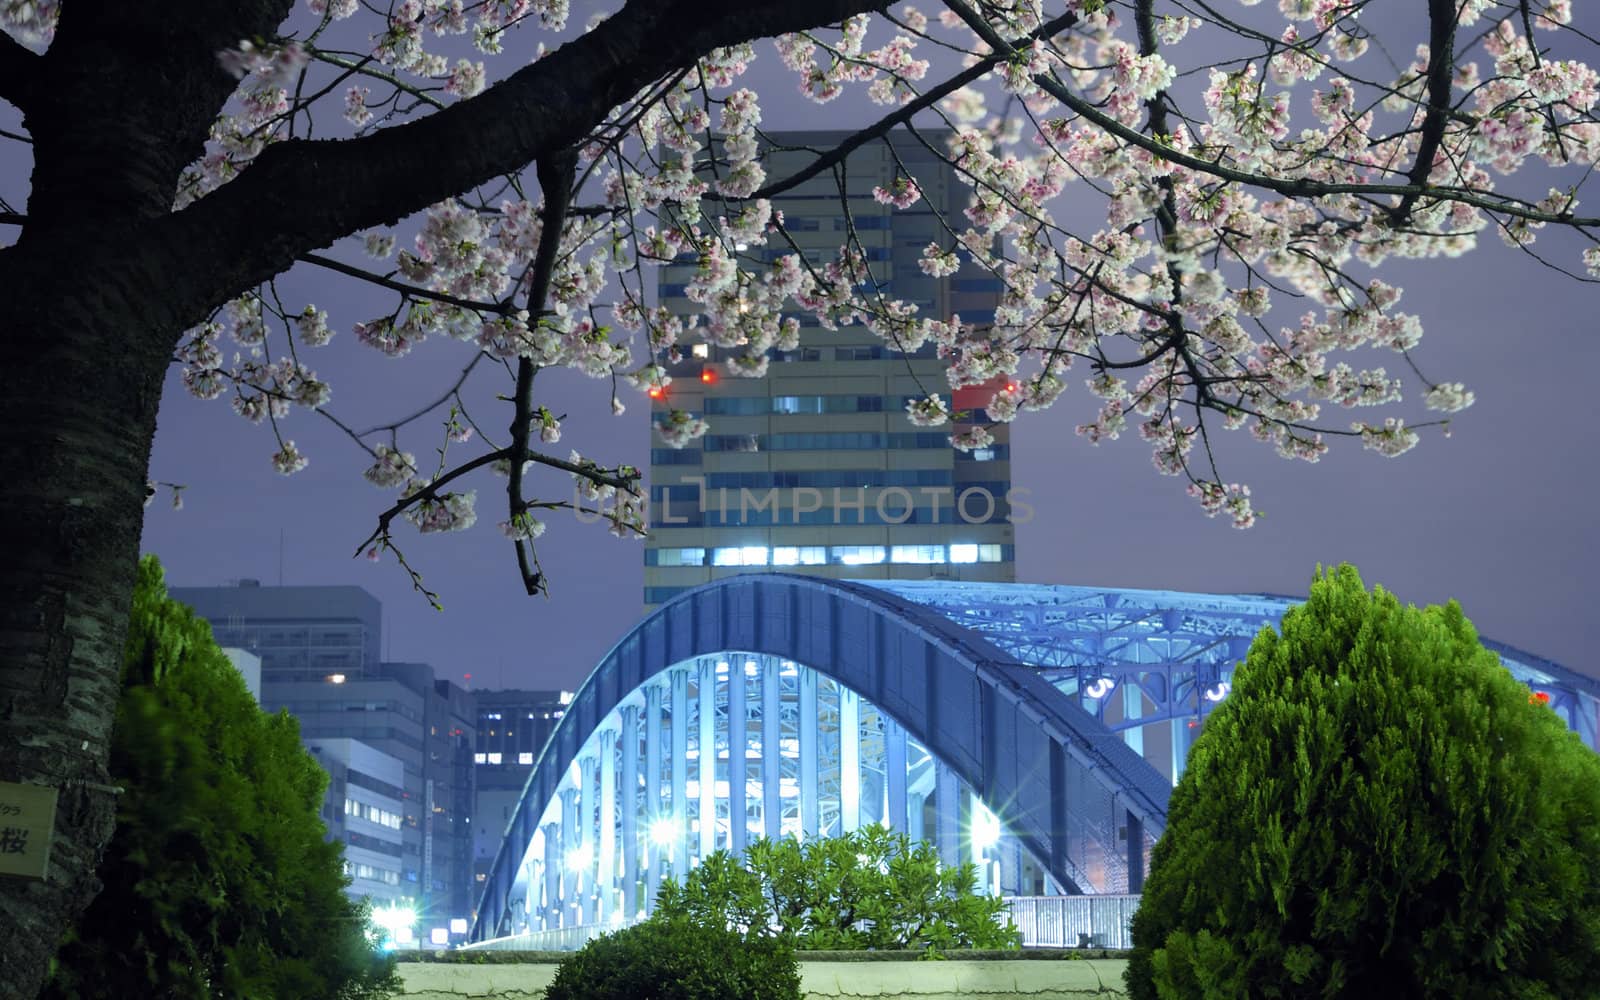 night city scenery with blossom cherry branch over metallic Eitai bridge in Tokyo Metropolis; focus on tree branches